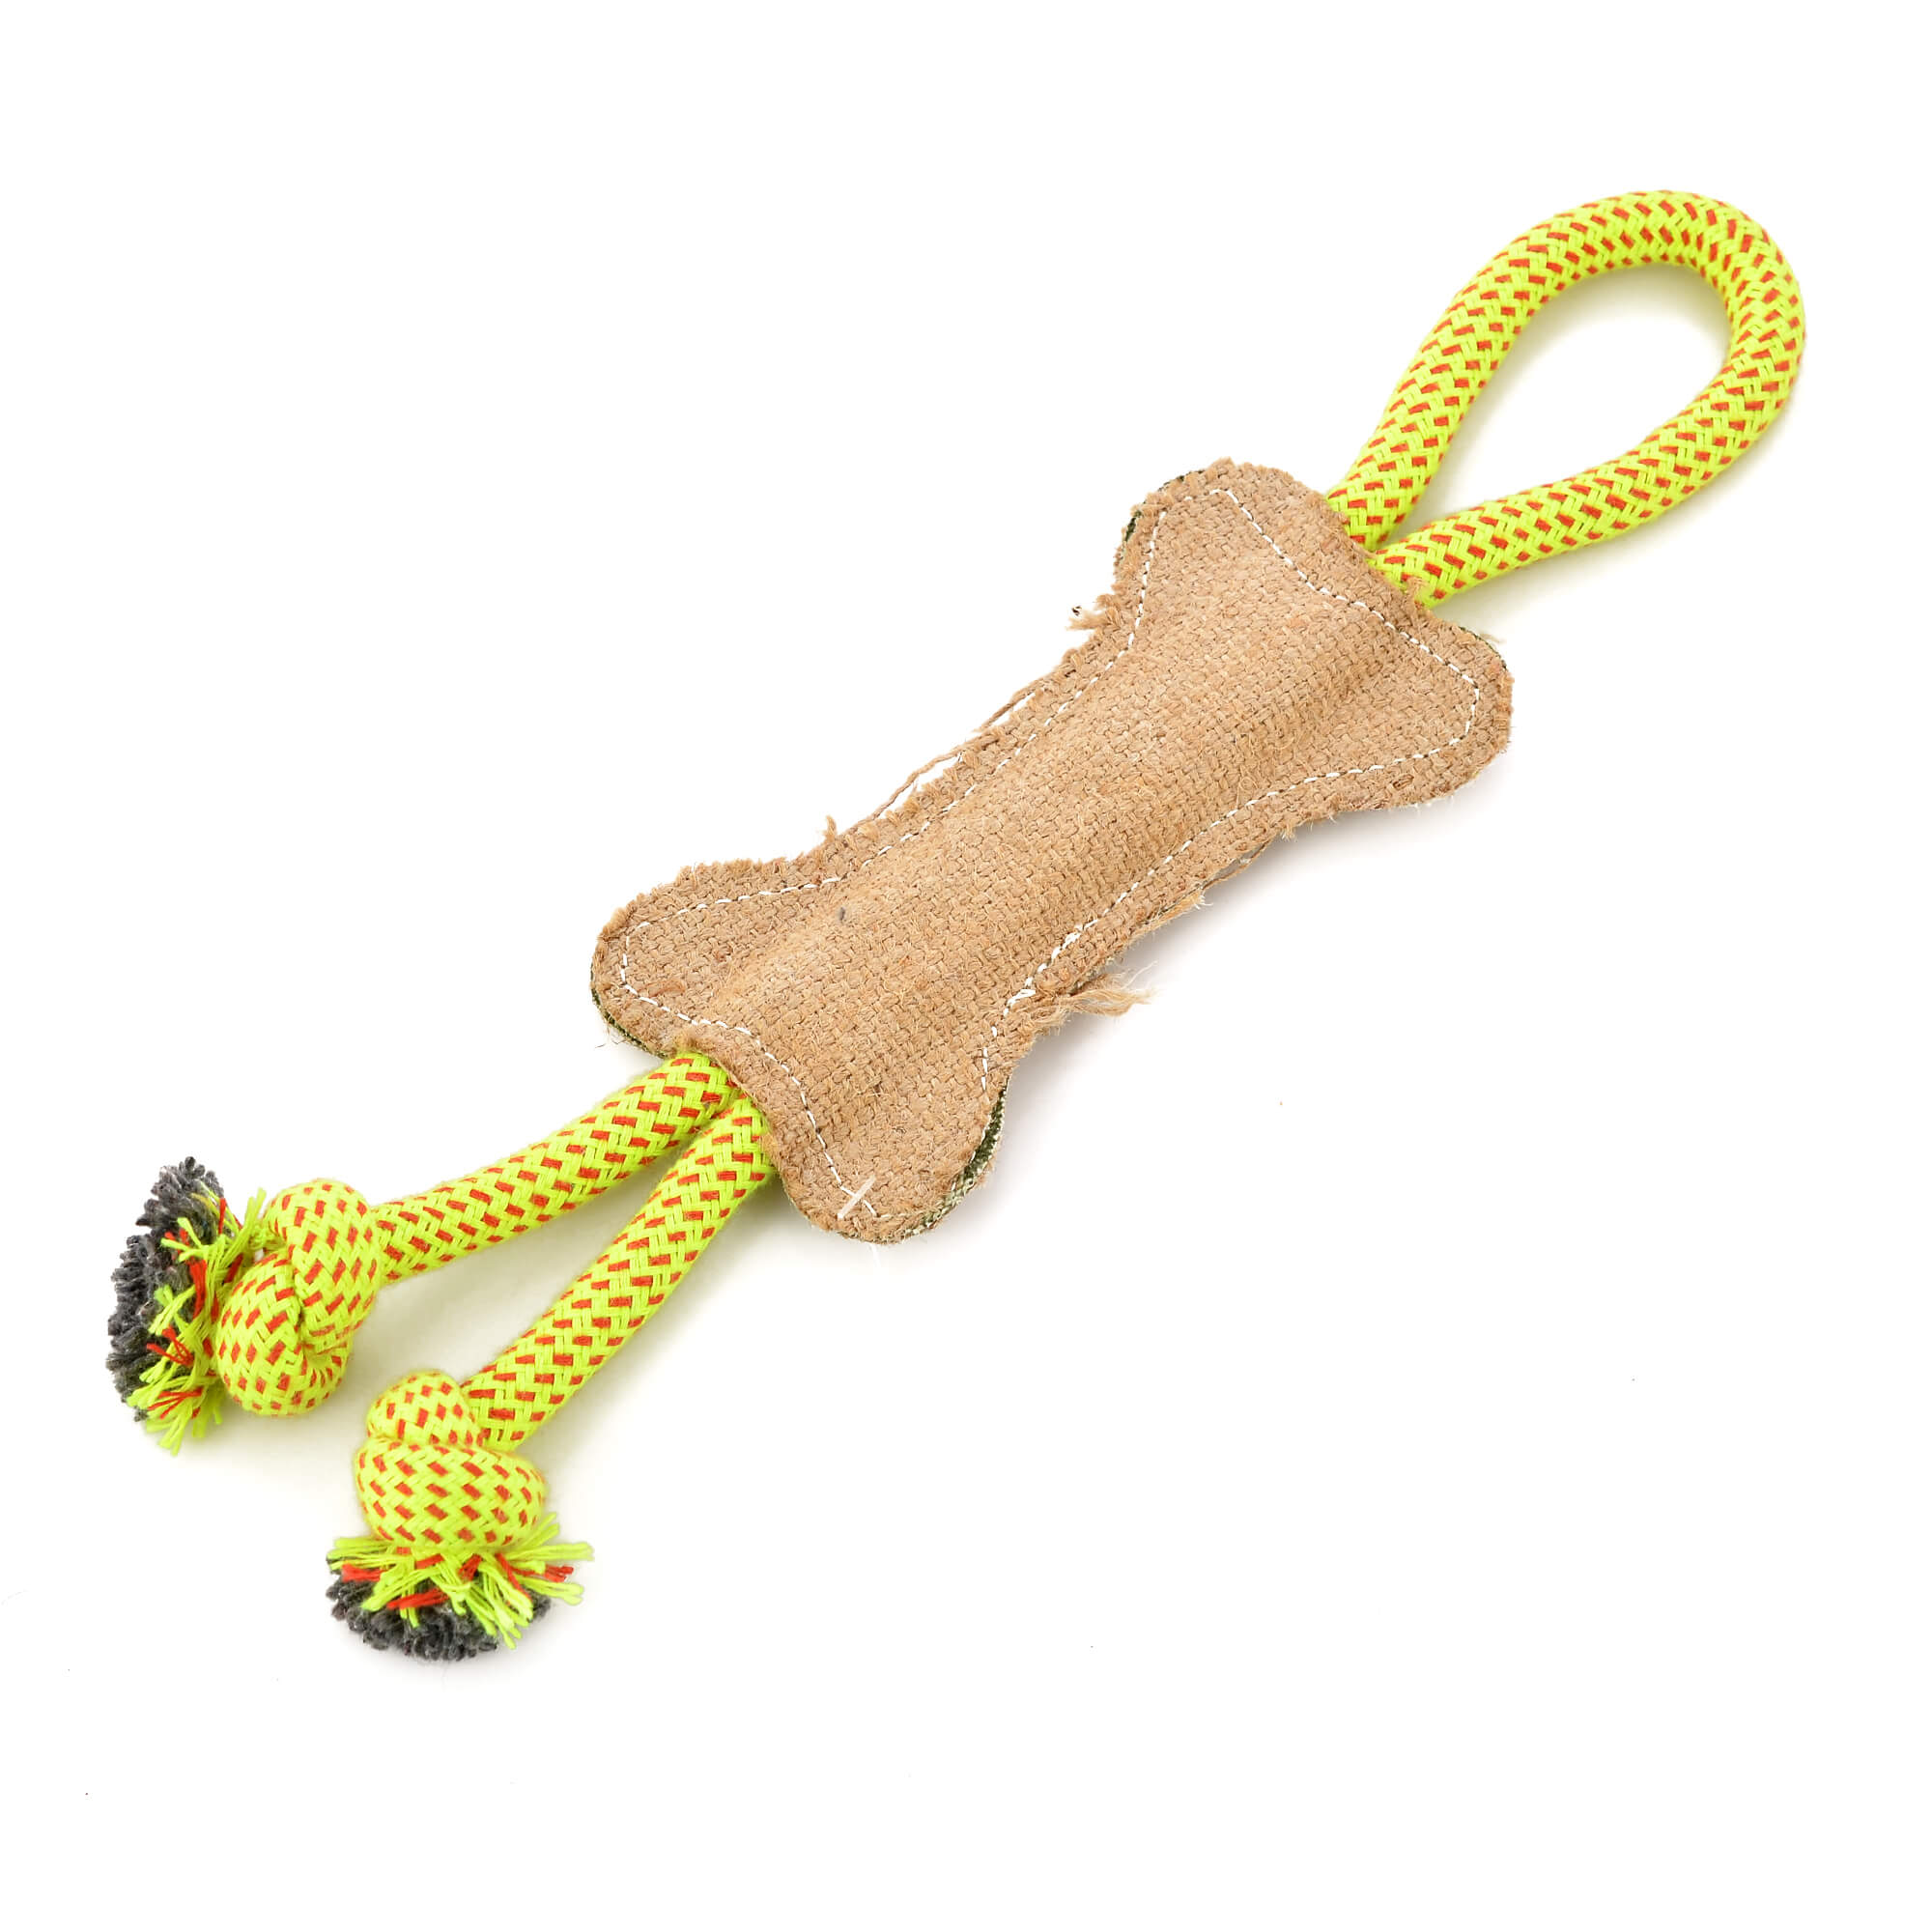 Tortoise Dog Teeth Cleaning Stick Rope Toys - Set of 1 - Inspire Uplift